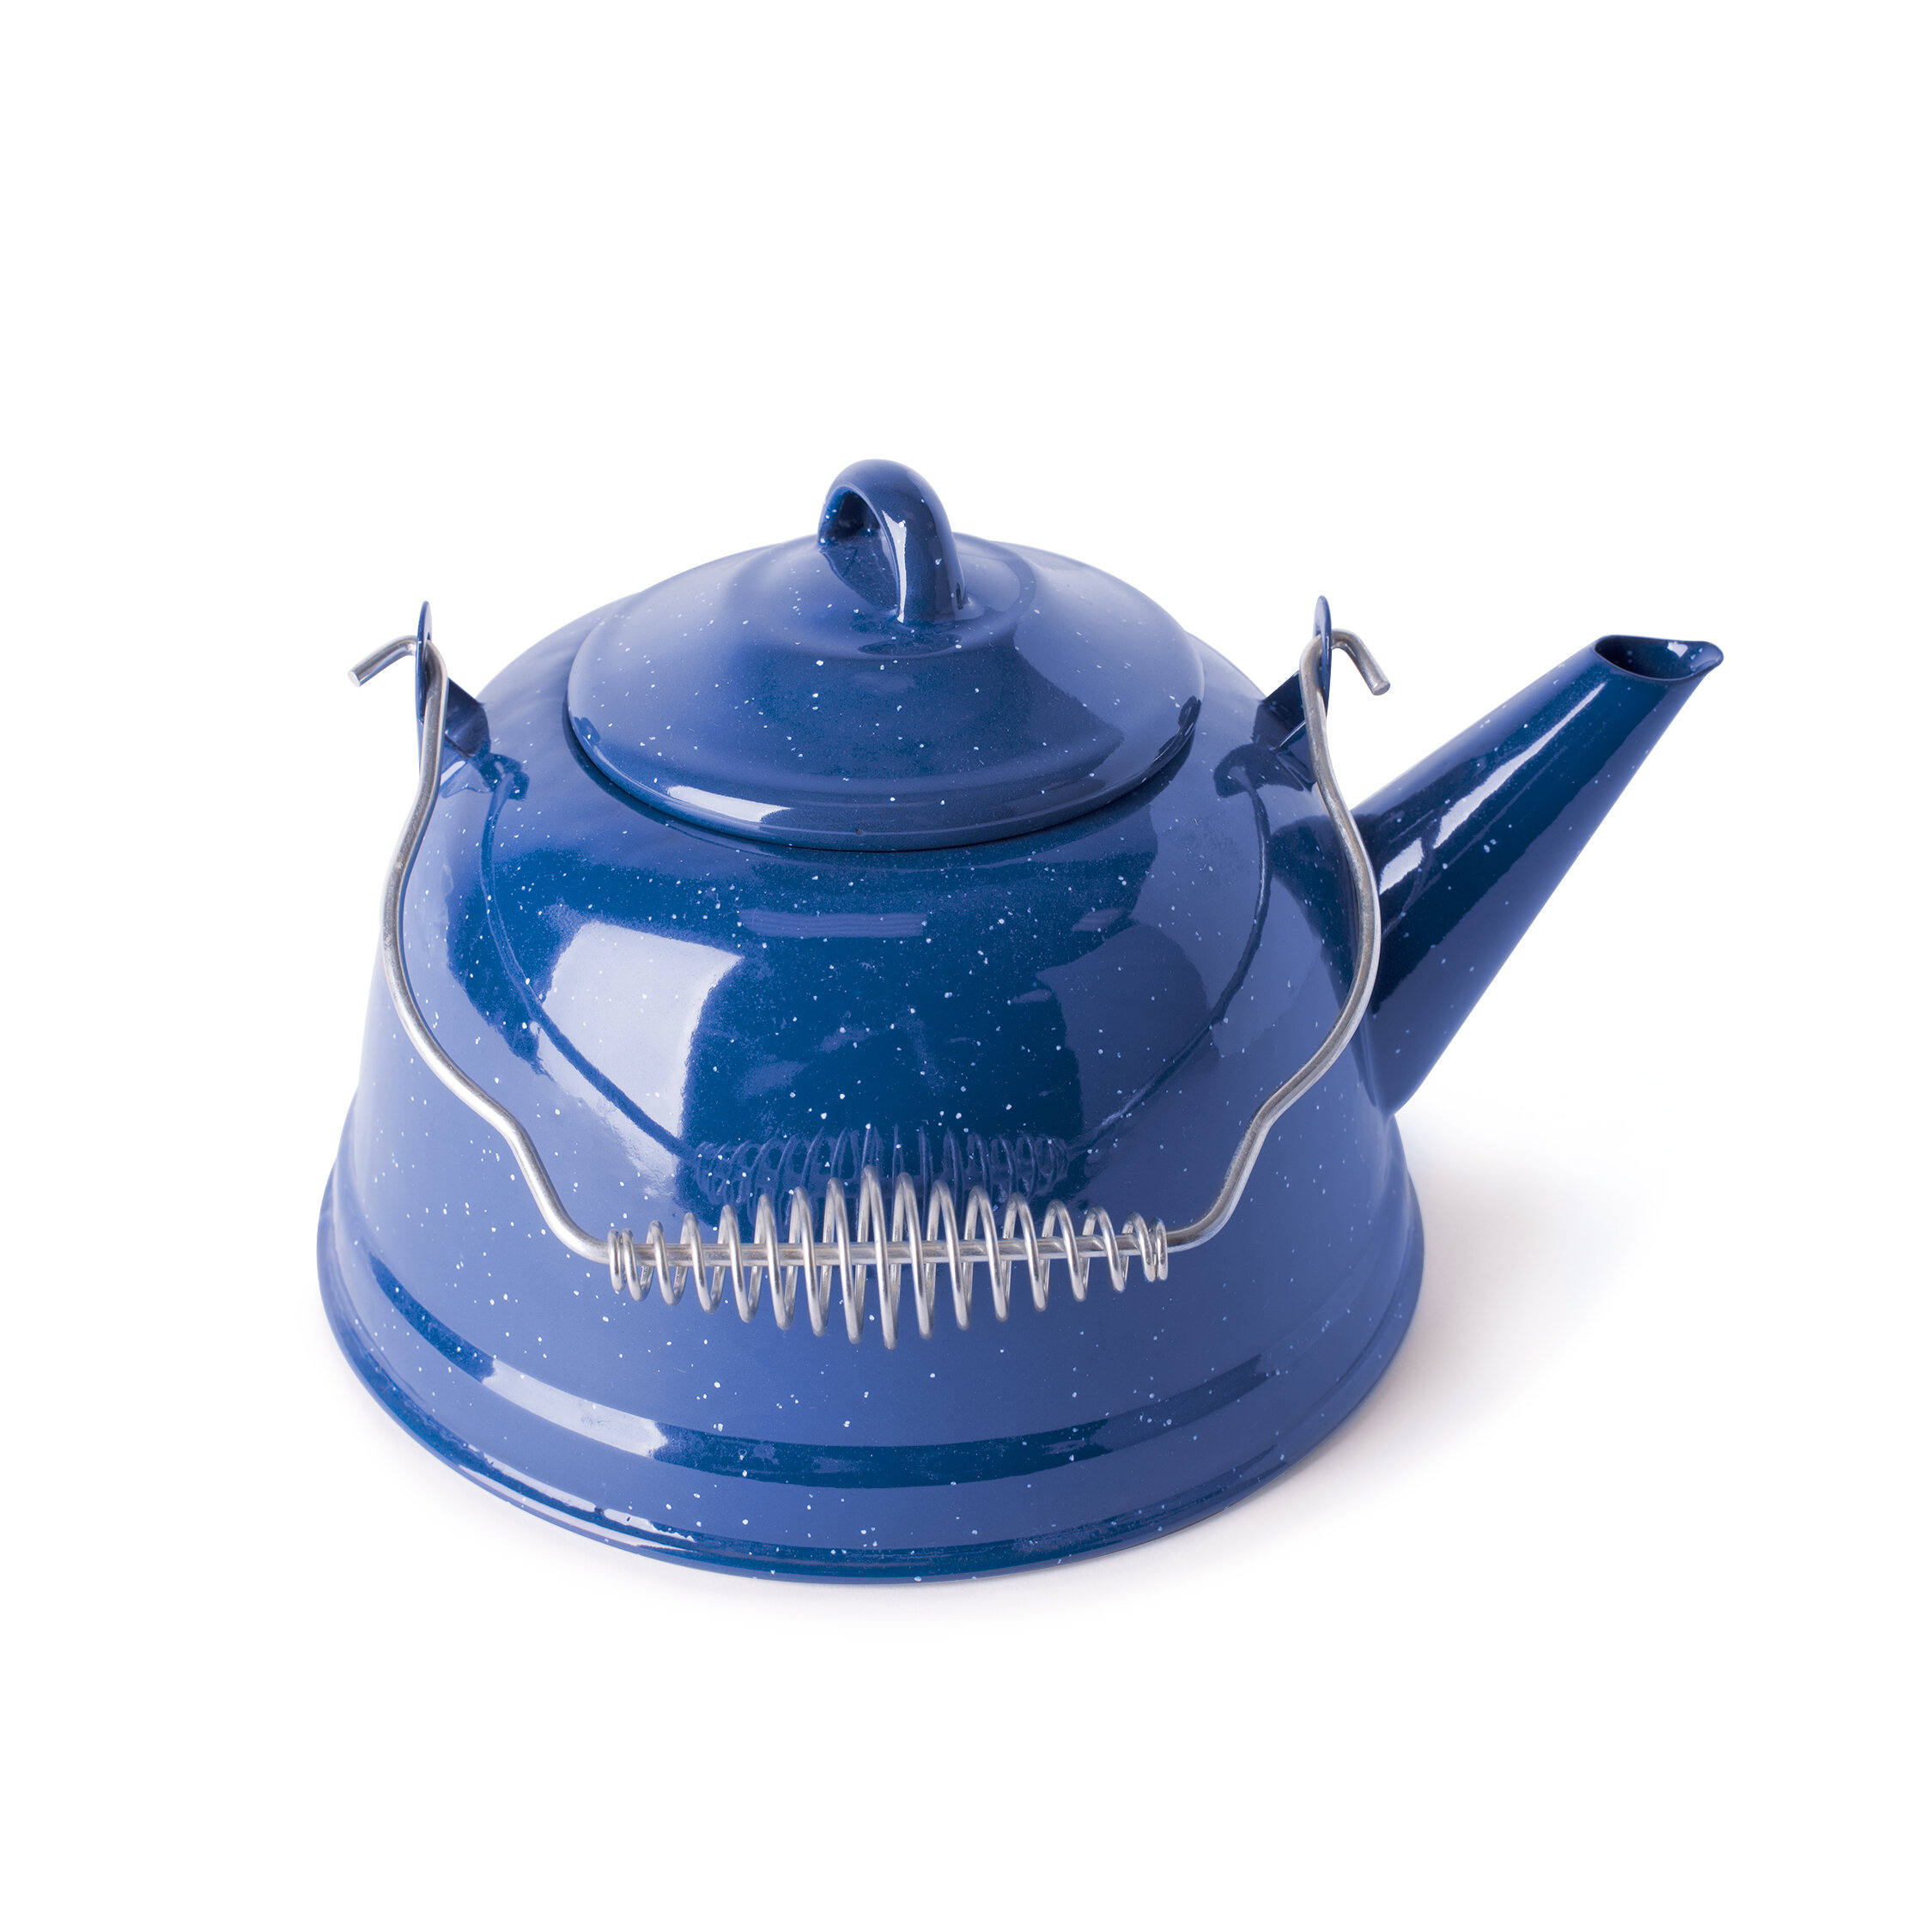 Enamel Percolator Coffee Pot 8 Cup - Blue - Stansport